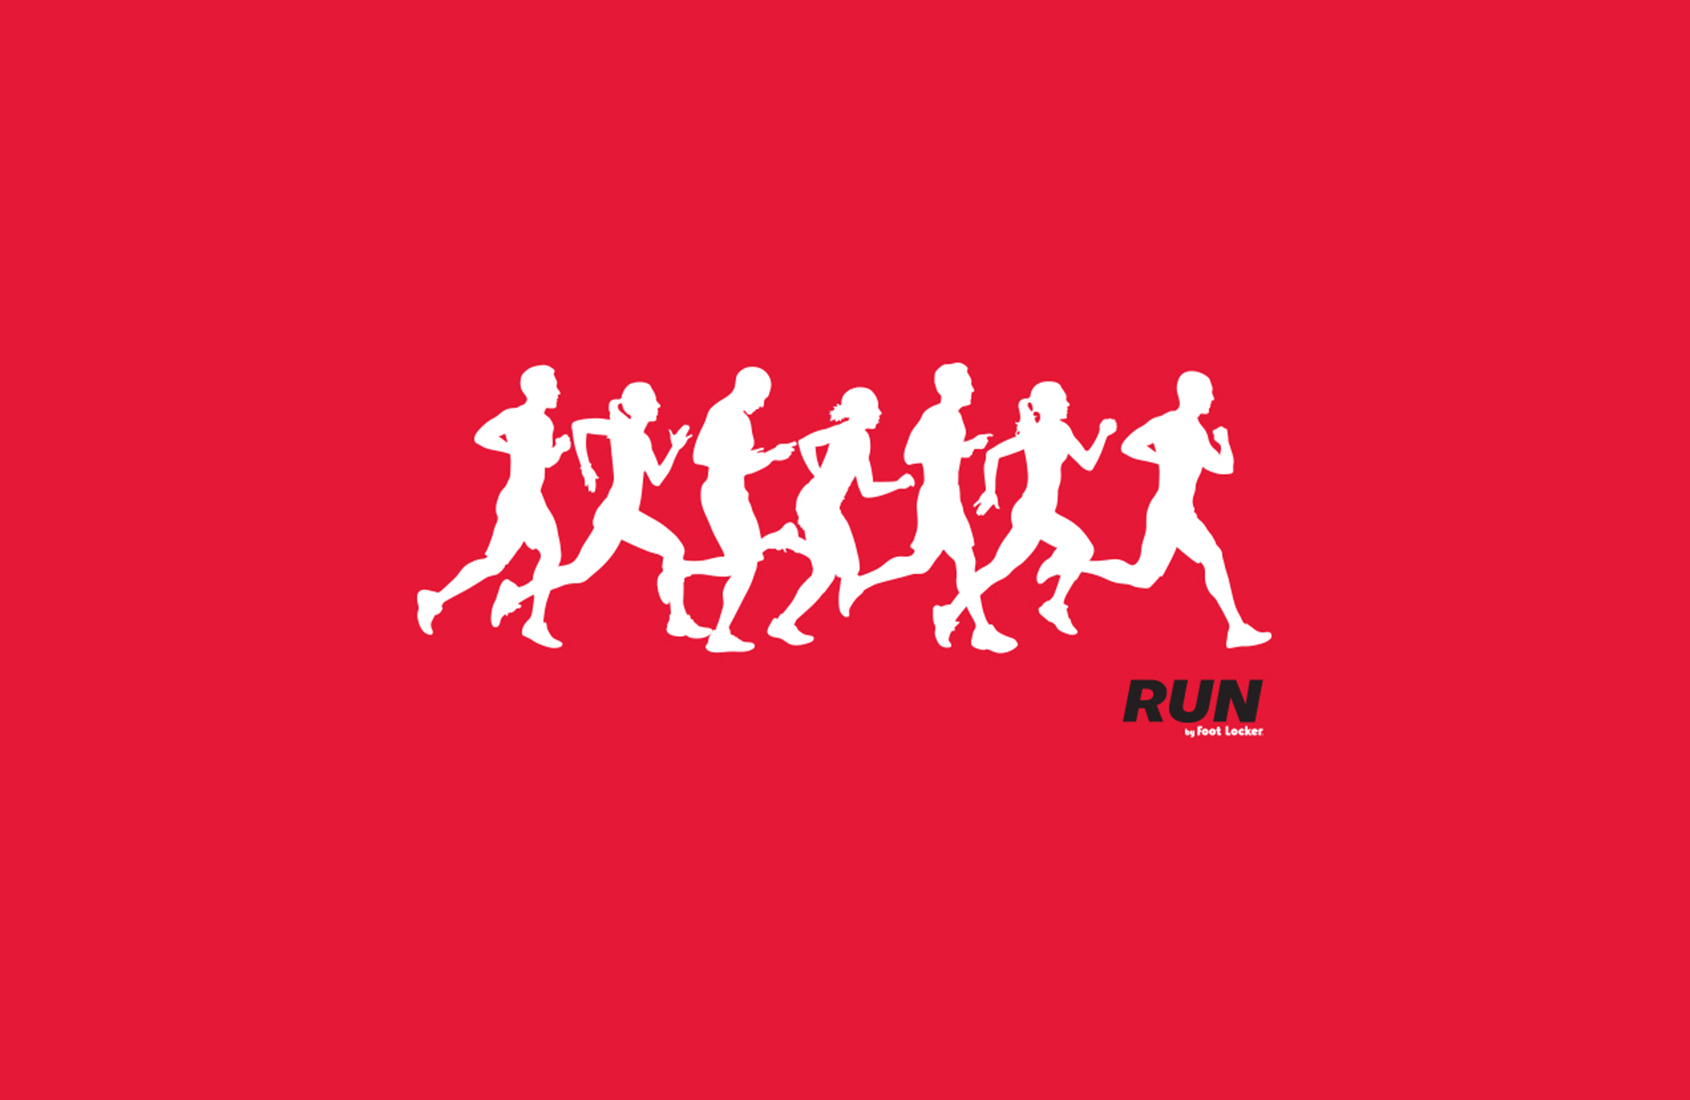 Run by Foot Locker logo